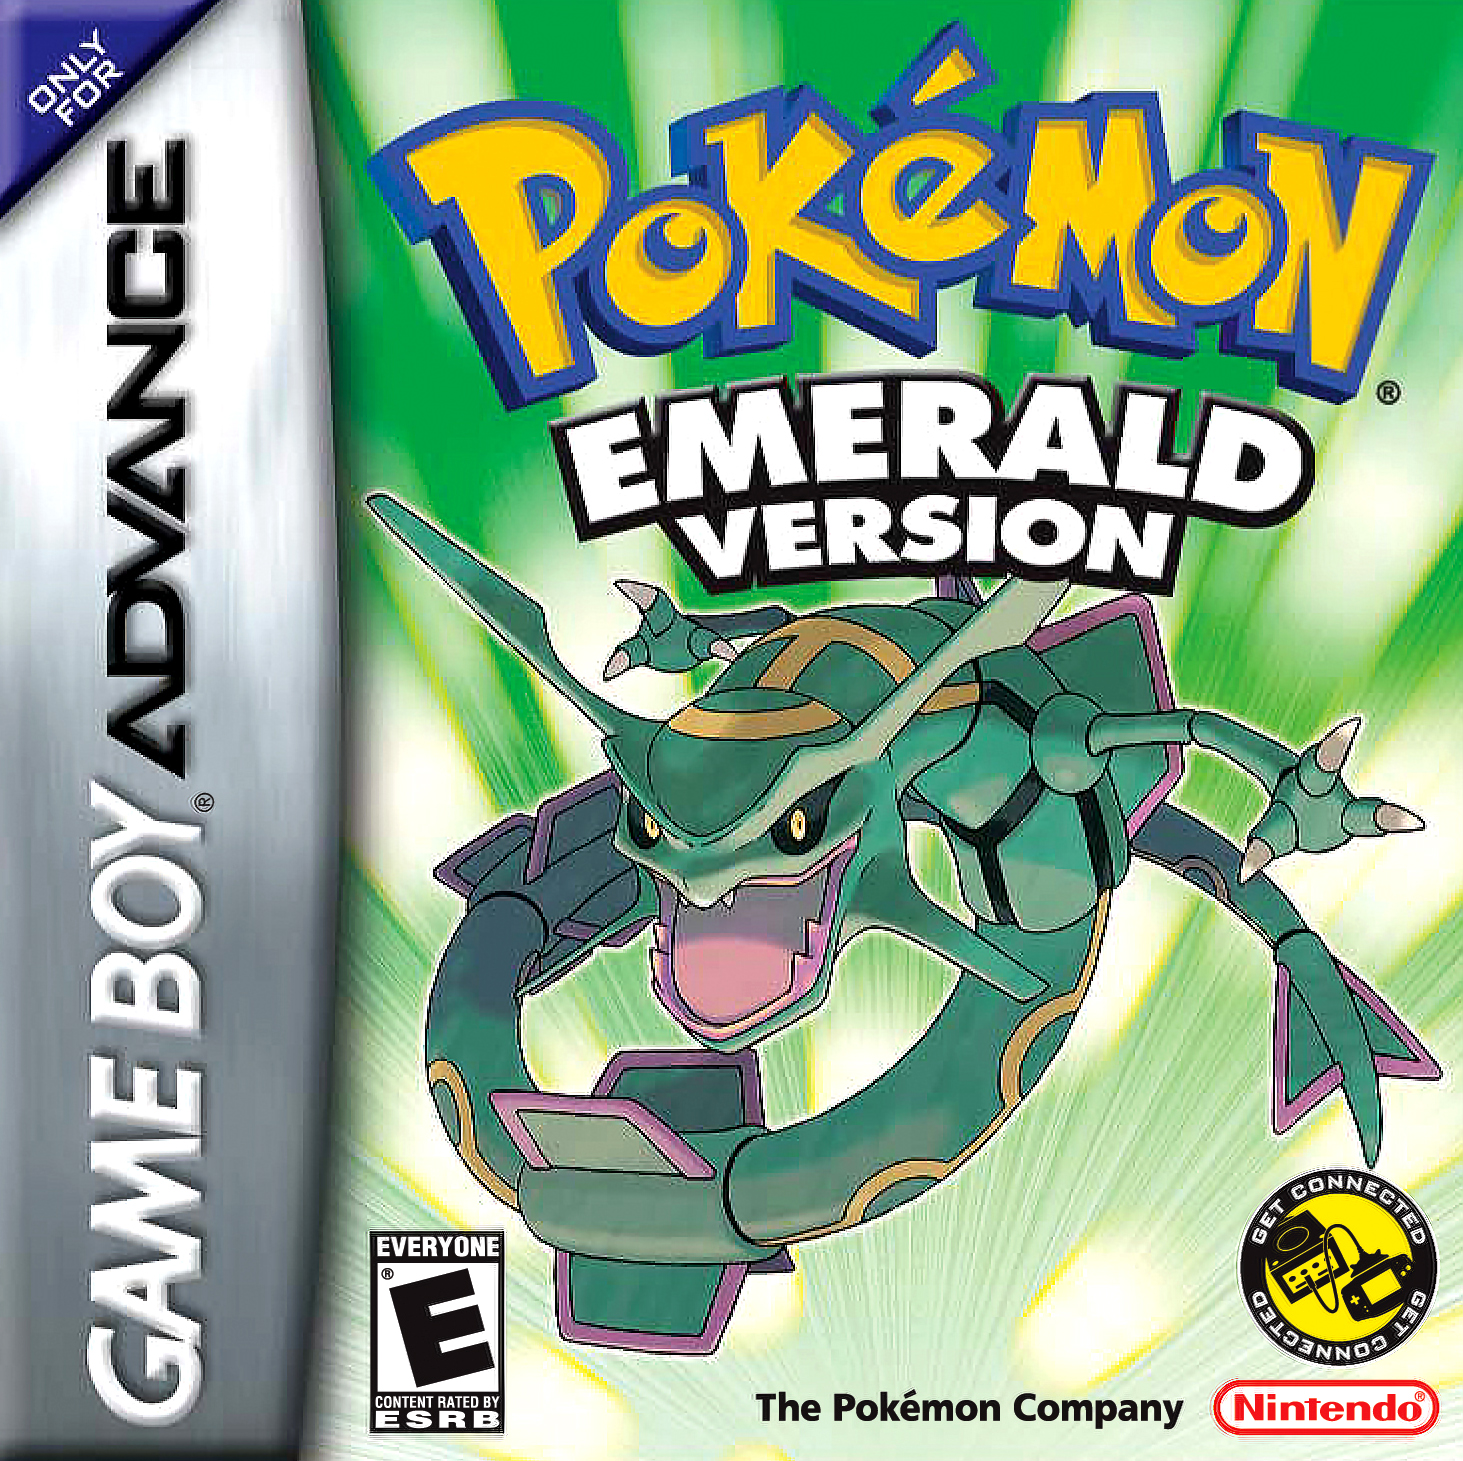 Pokemon Emerald Crest (GBA) Download - PokéHarbor